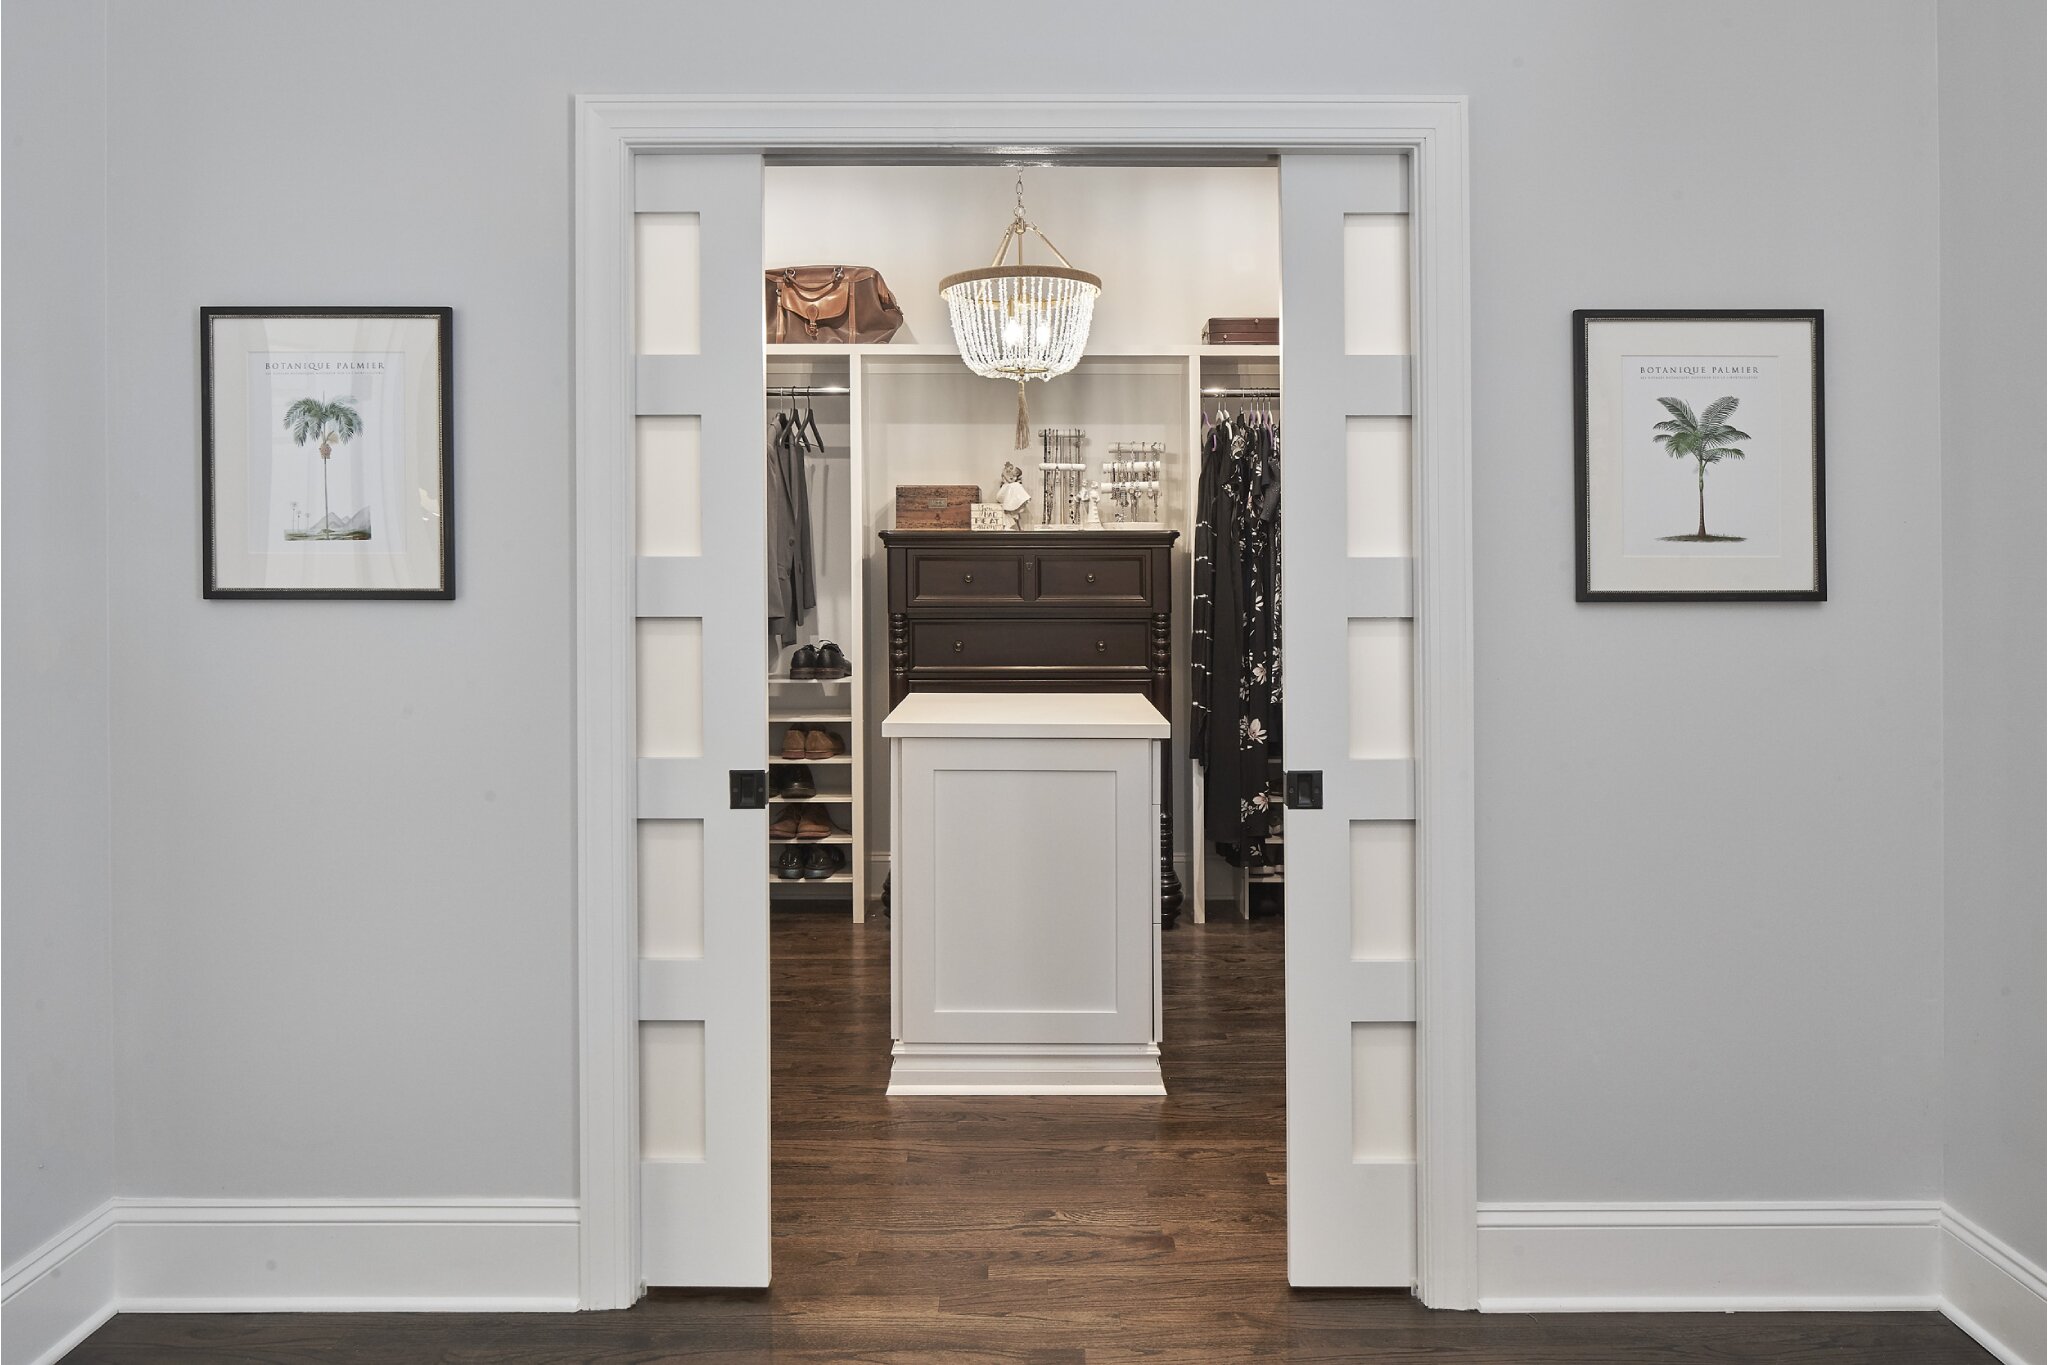 Craftsman closet upgrade with double five-panel pocket doors, custom built-ins, center island, and statement chandelier